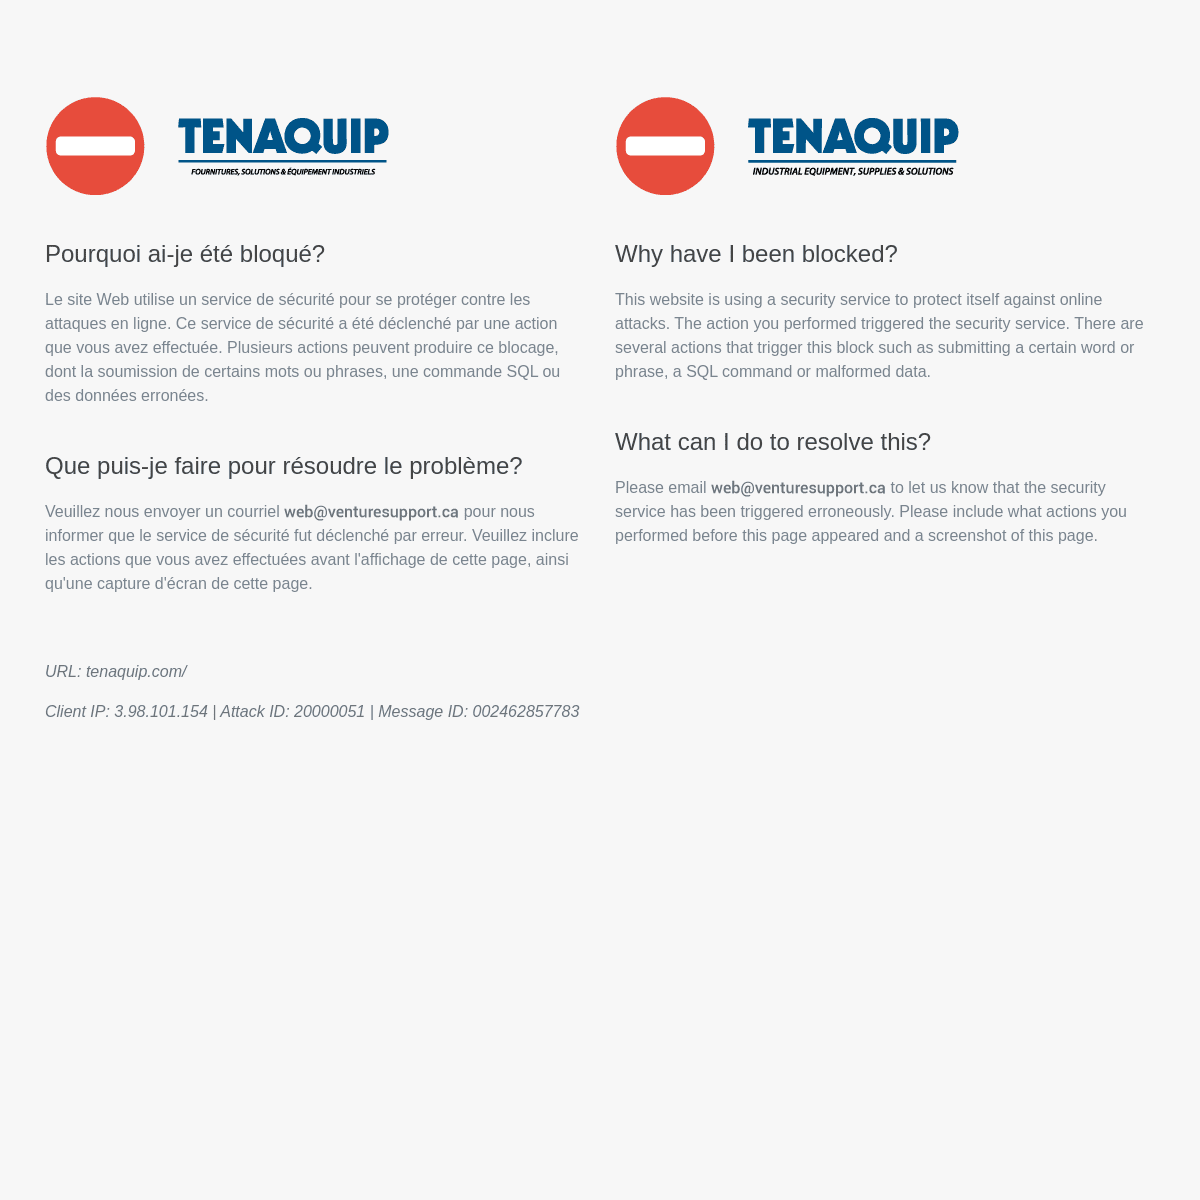 A complete backup of https://tenaquip.com